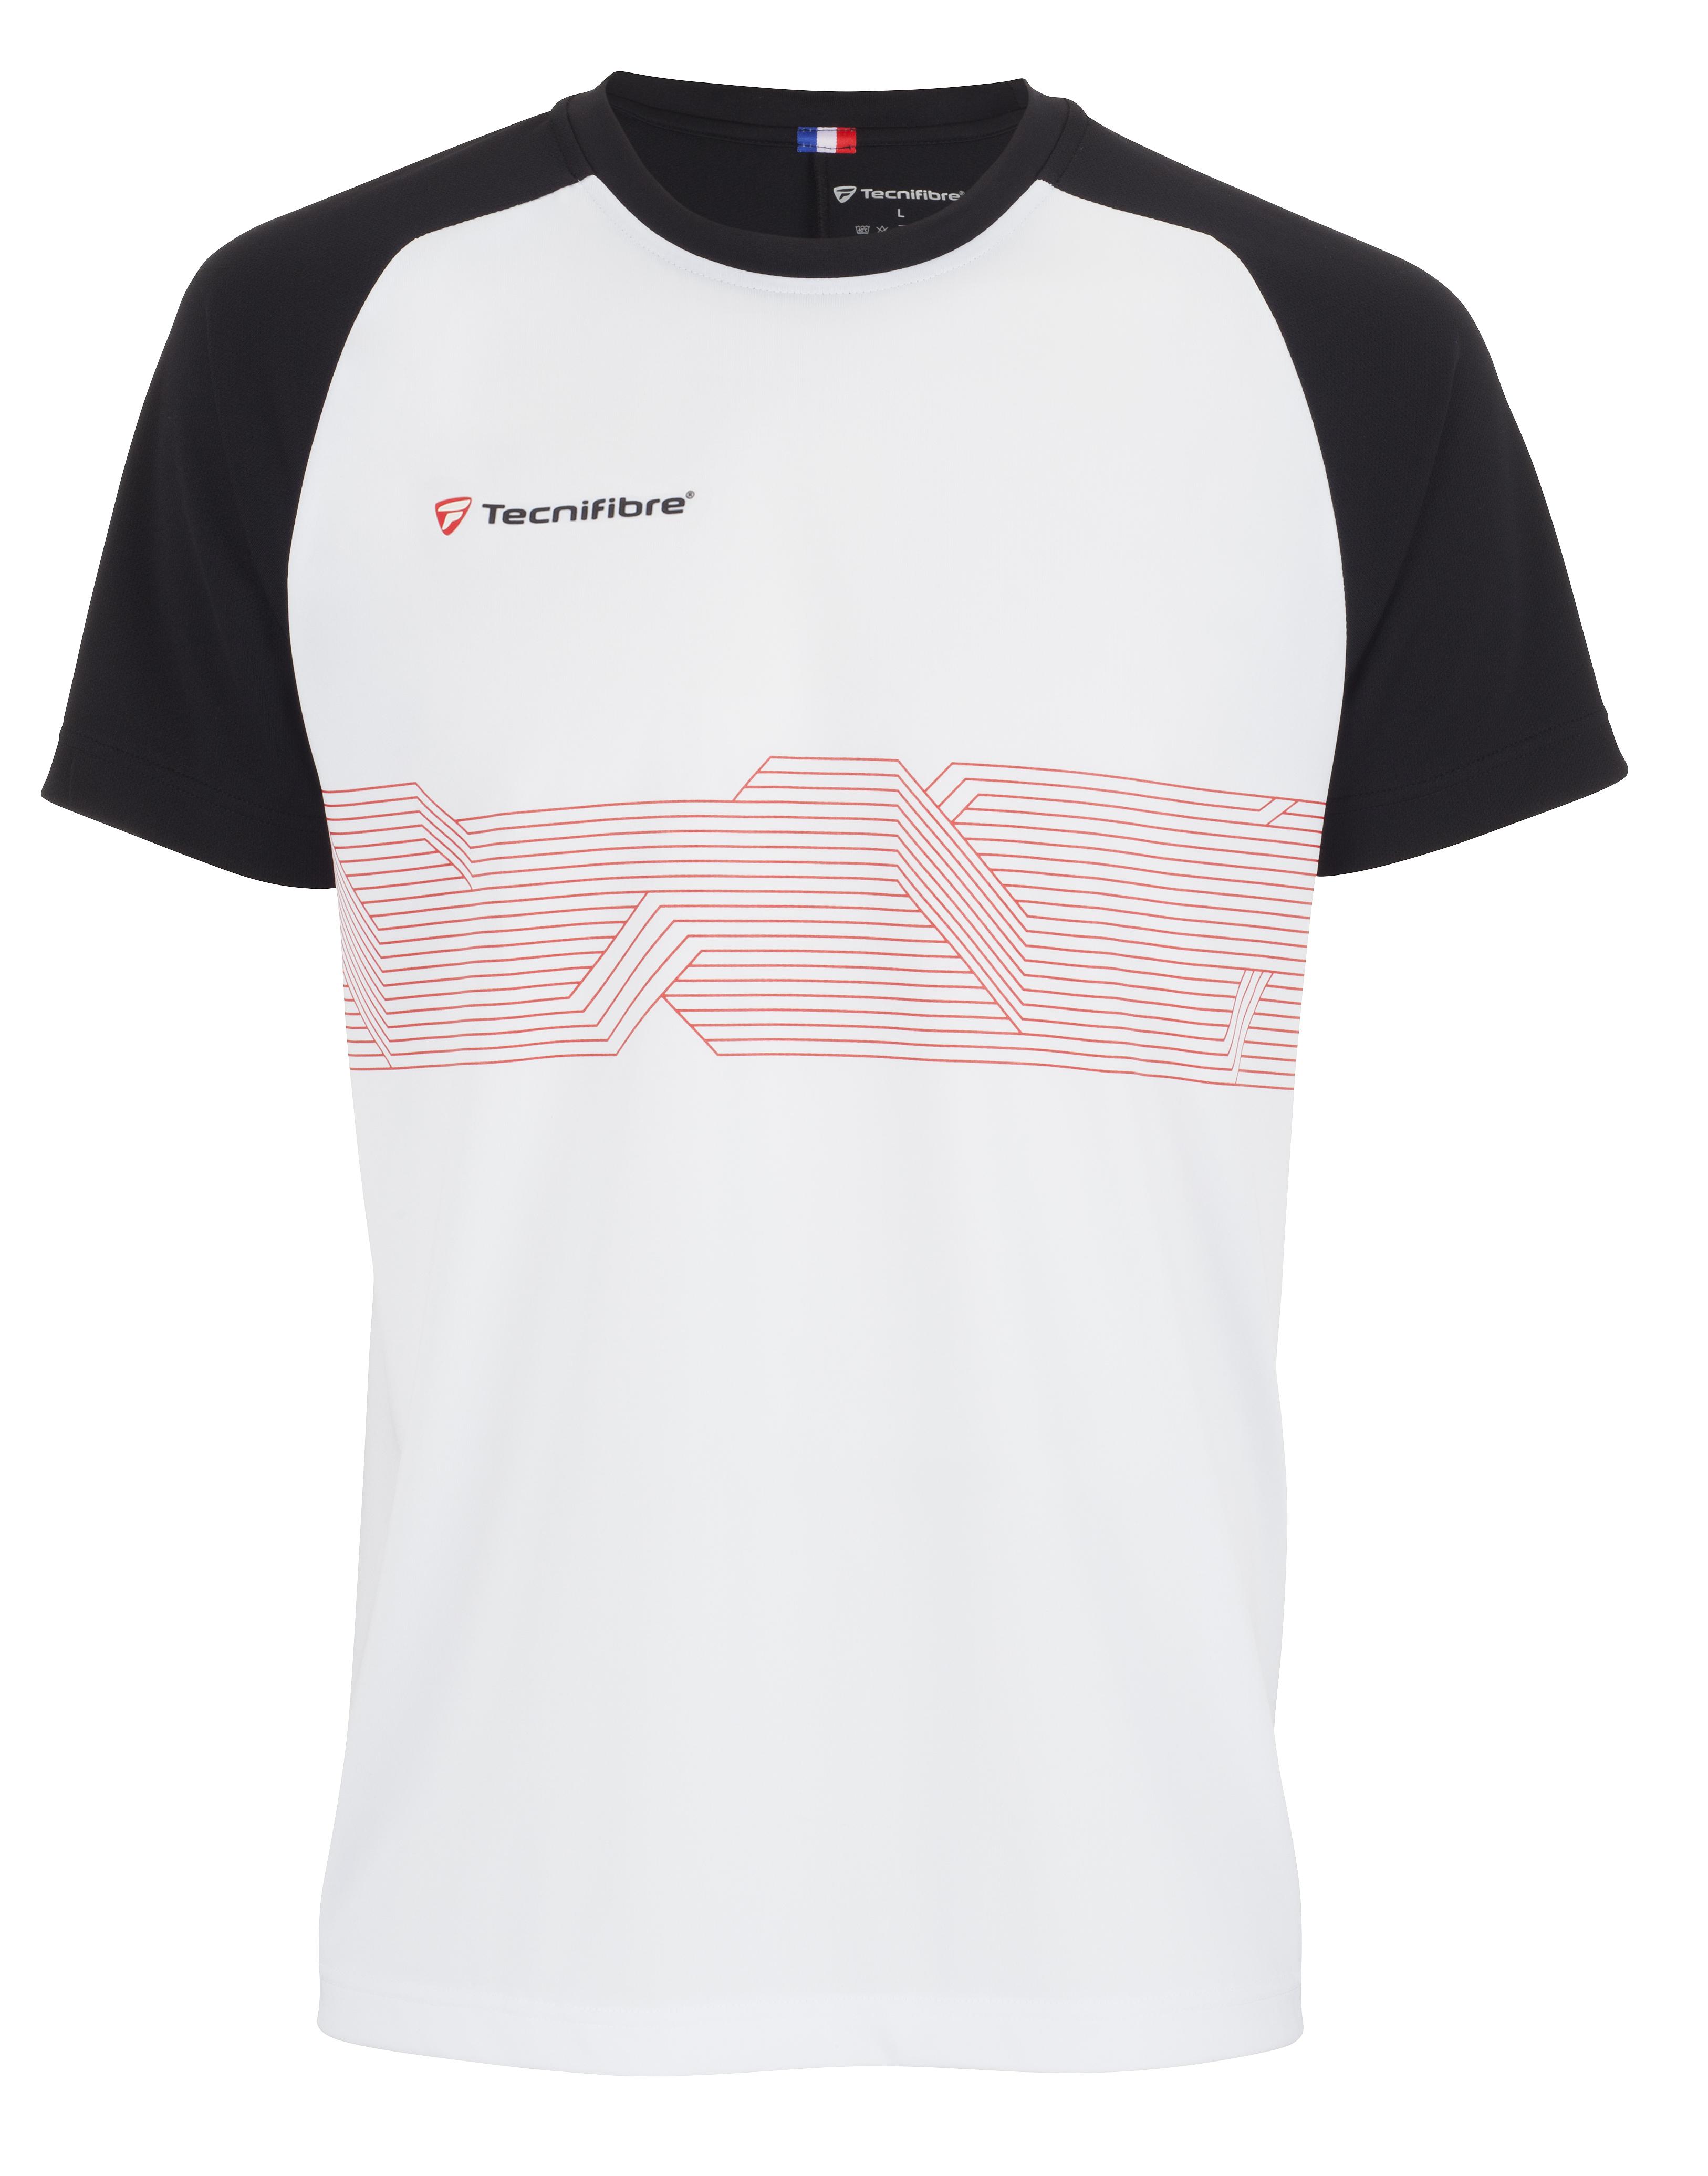 Tecnifibre F2 Airmesh Shirt (White/Black)